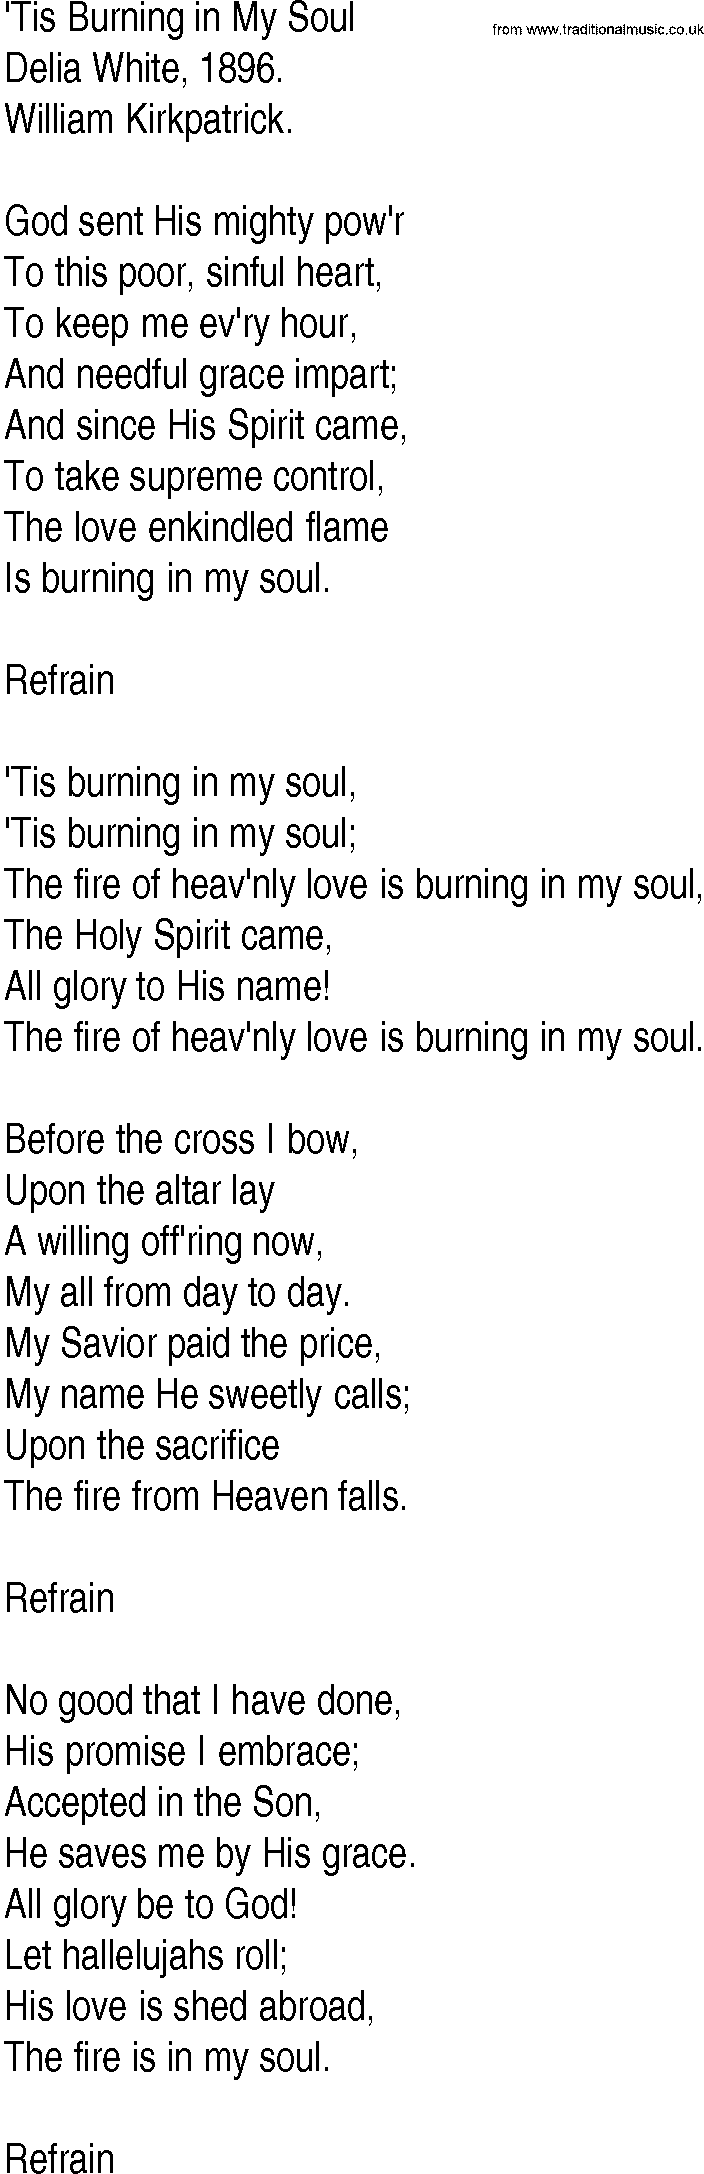 Hymn and Gospel Song: 'Tis Burning in My Soul by Delia White lyrics